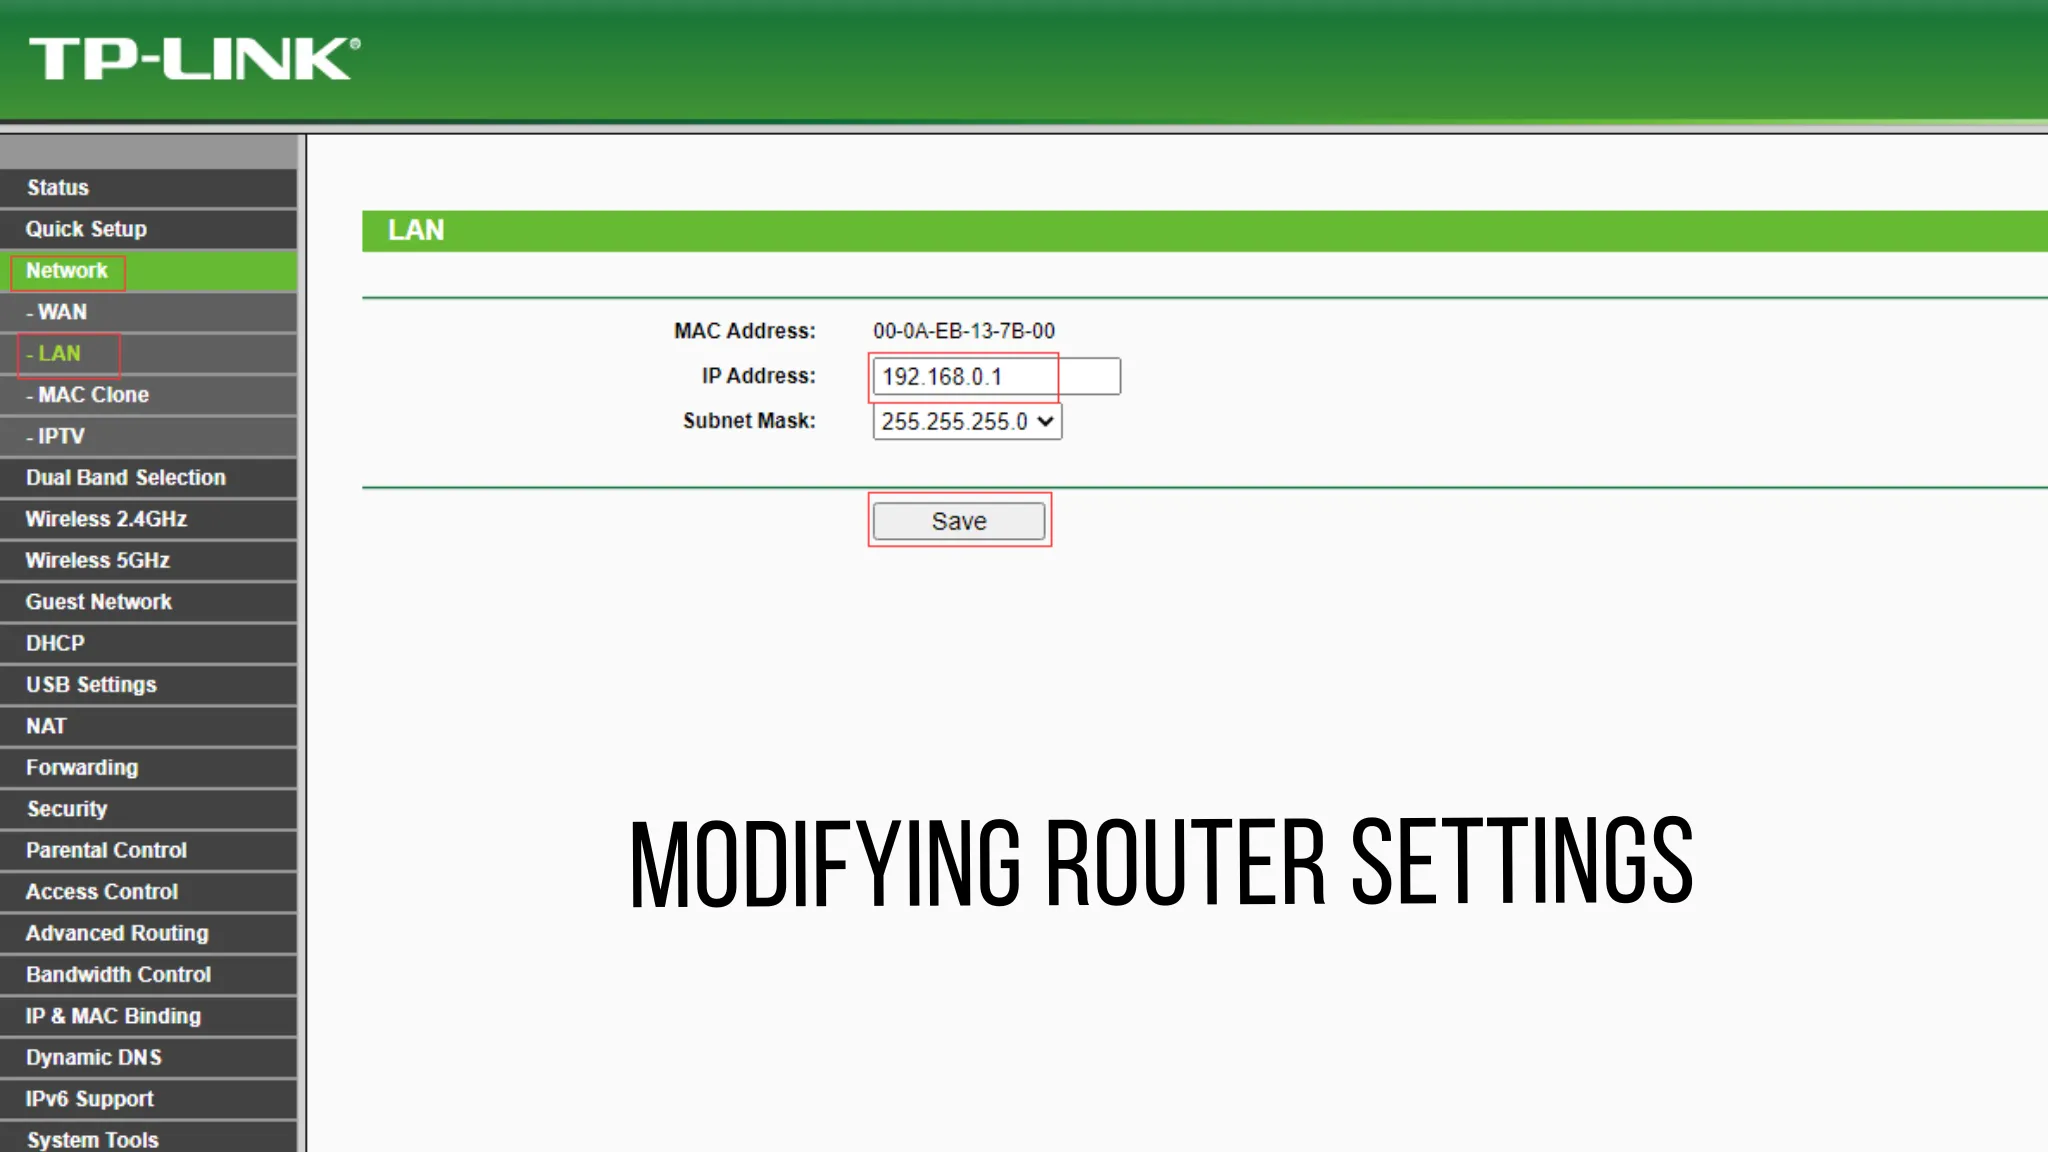 Modifying router settings